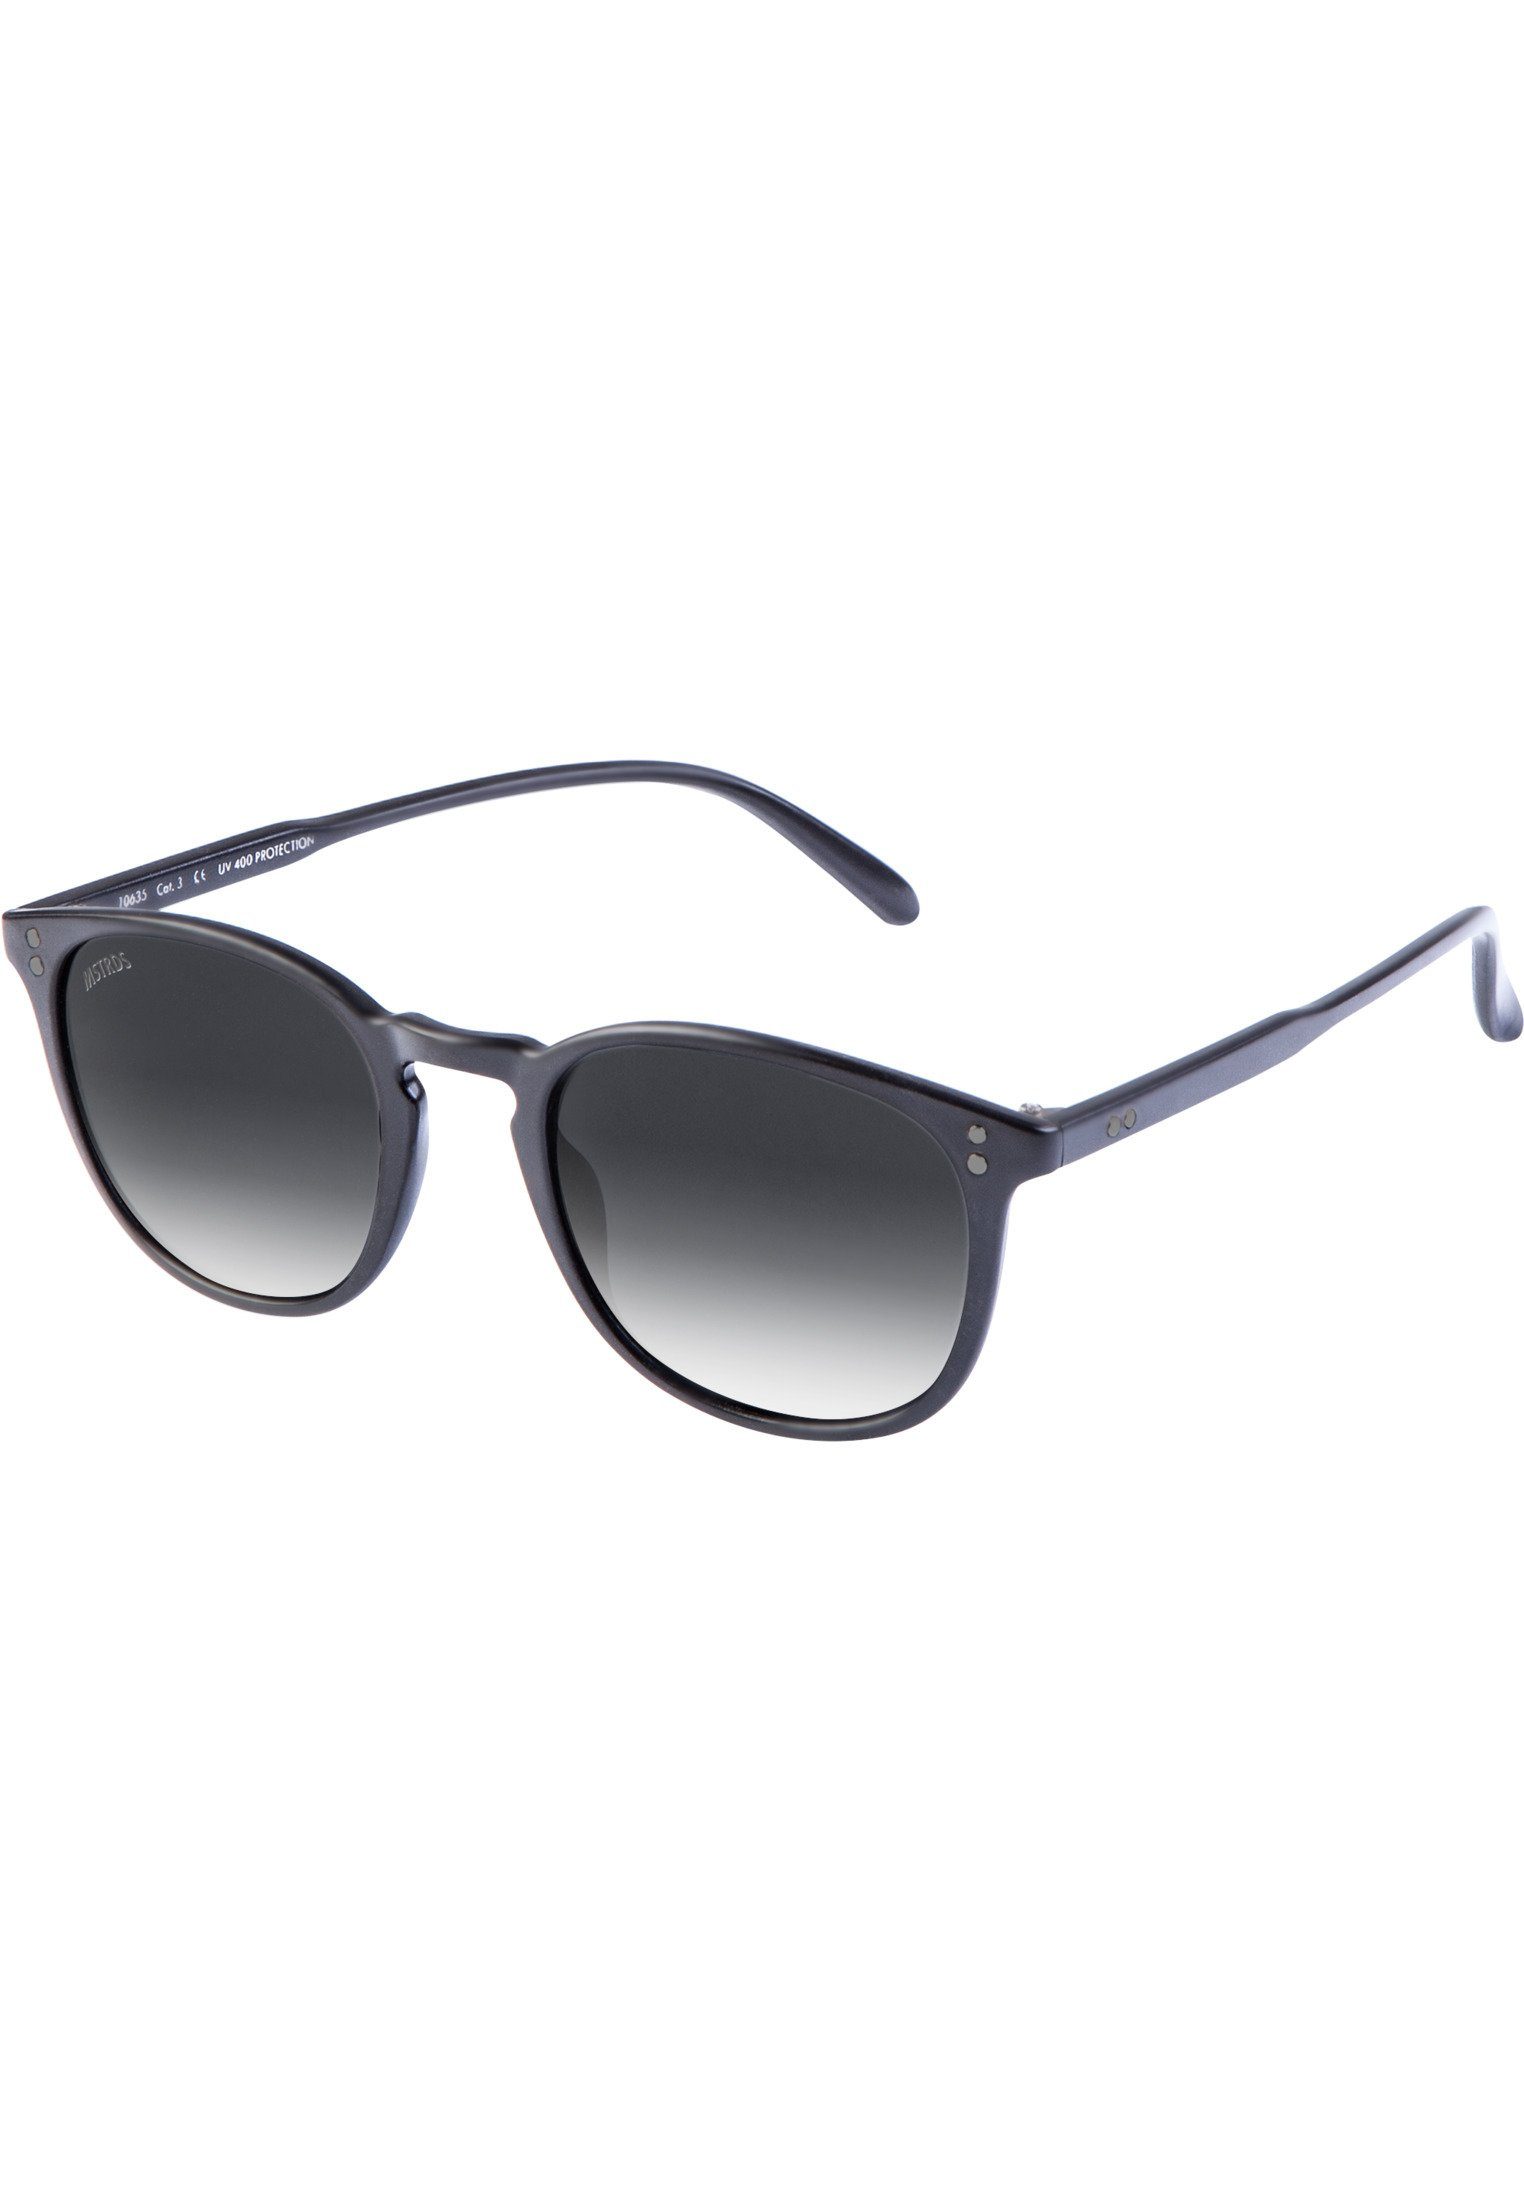 MSTRDS Sonnenbrille Accessoires Sunglasses Youth blk/gry Arthur